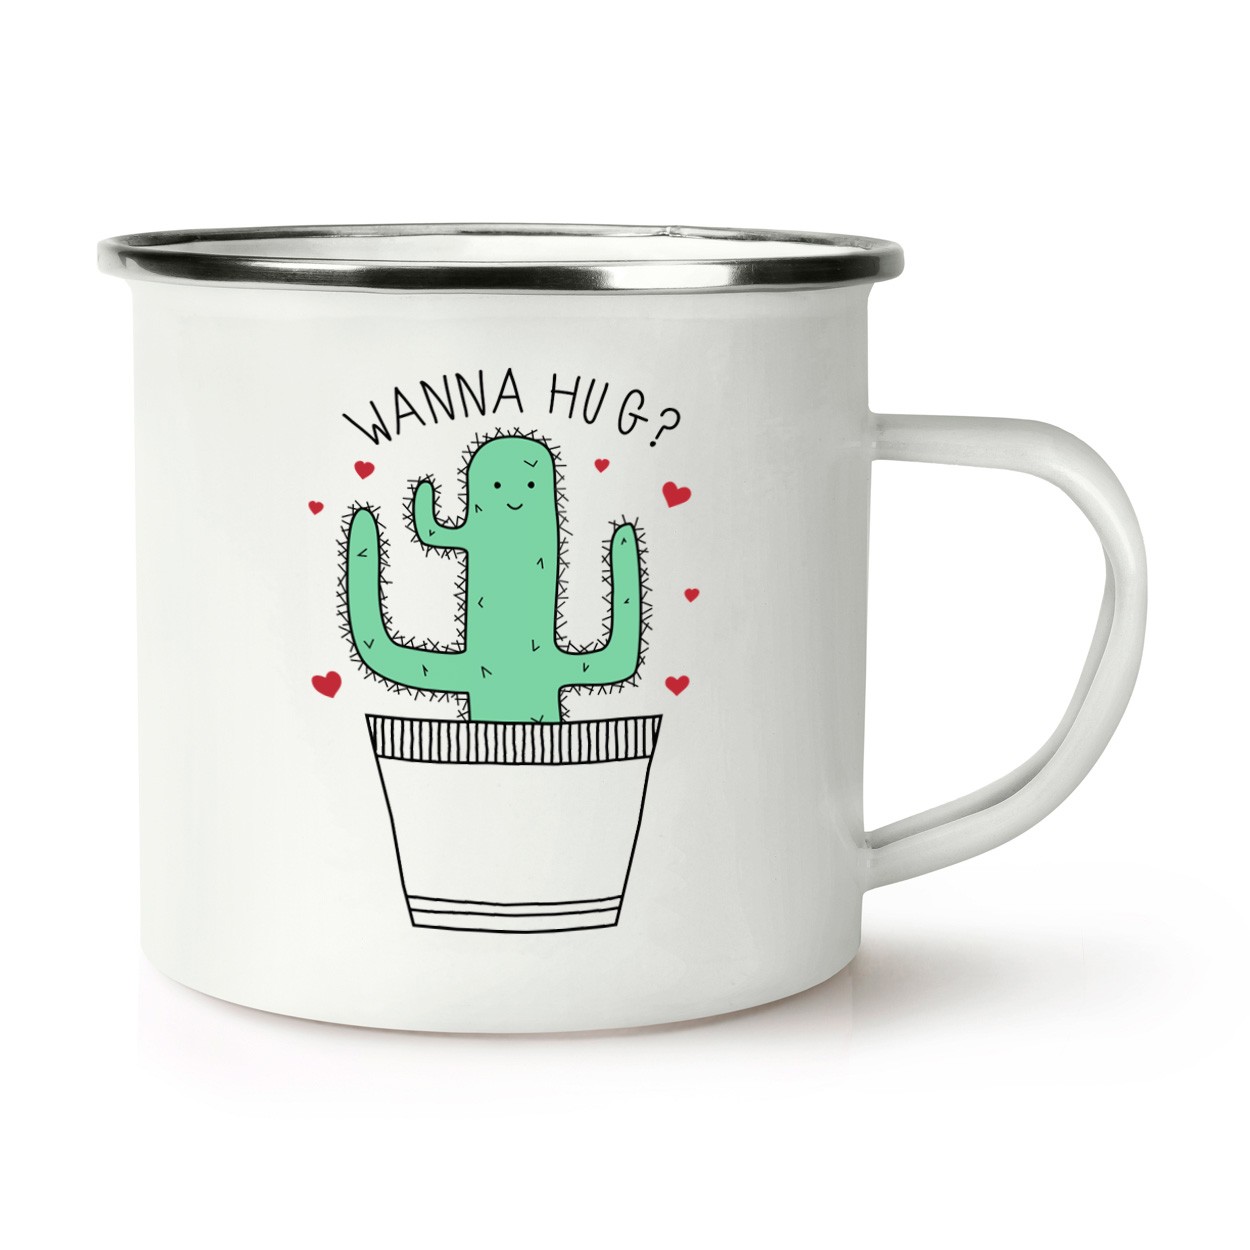 Cactus Wanna Hug Retro Enamel Mug Cup